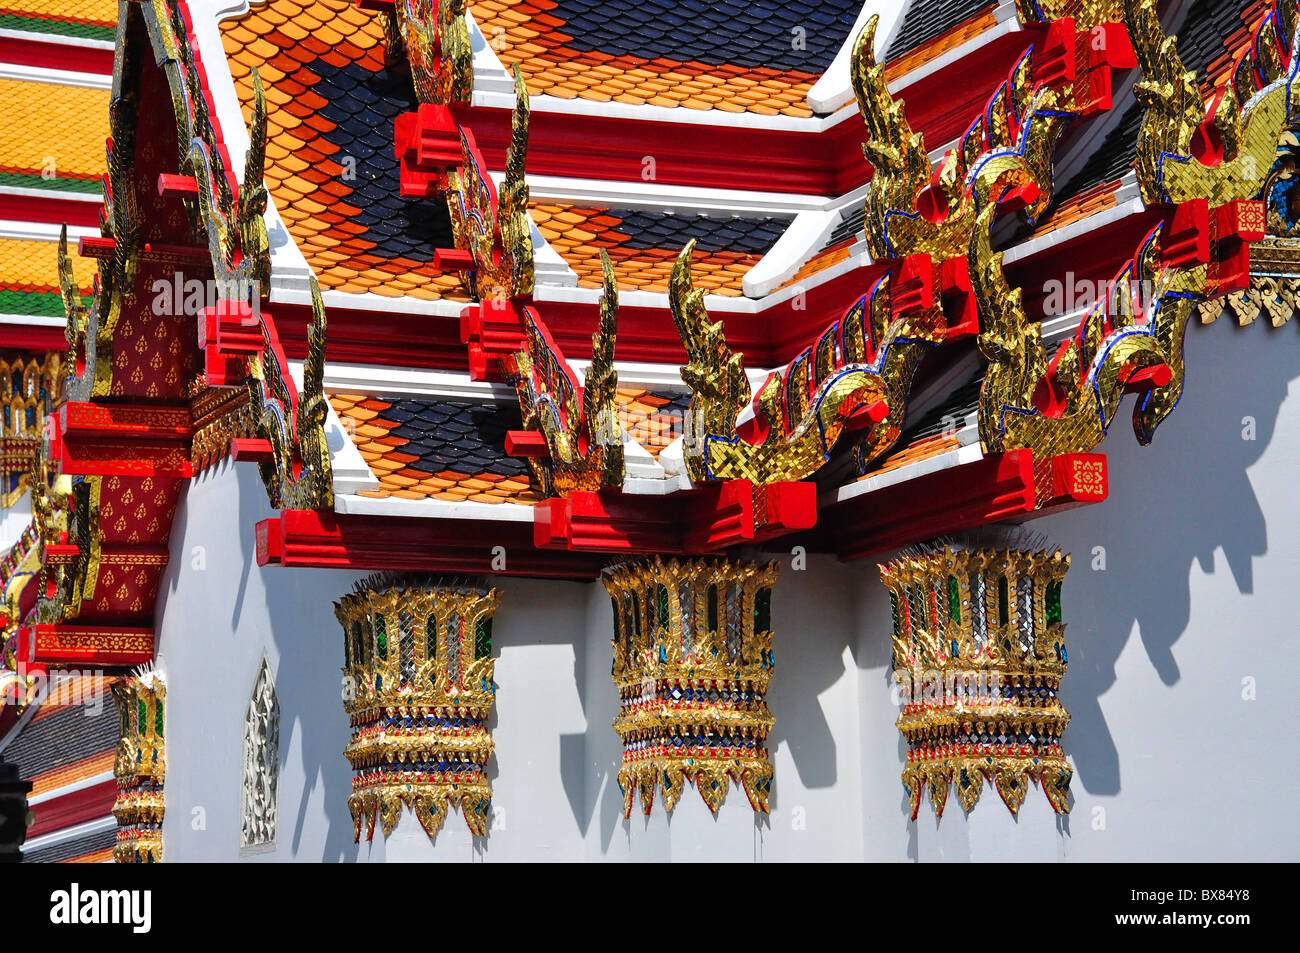 Decorative facade of Wat Pho Temple, Rattanakosin Island, Bangkok, Thailand Stock Photo